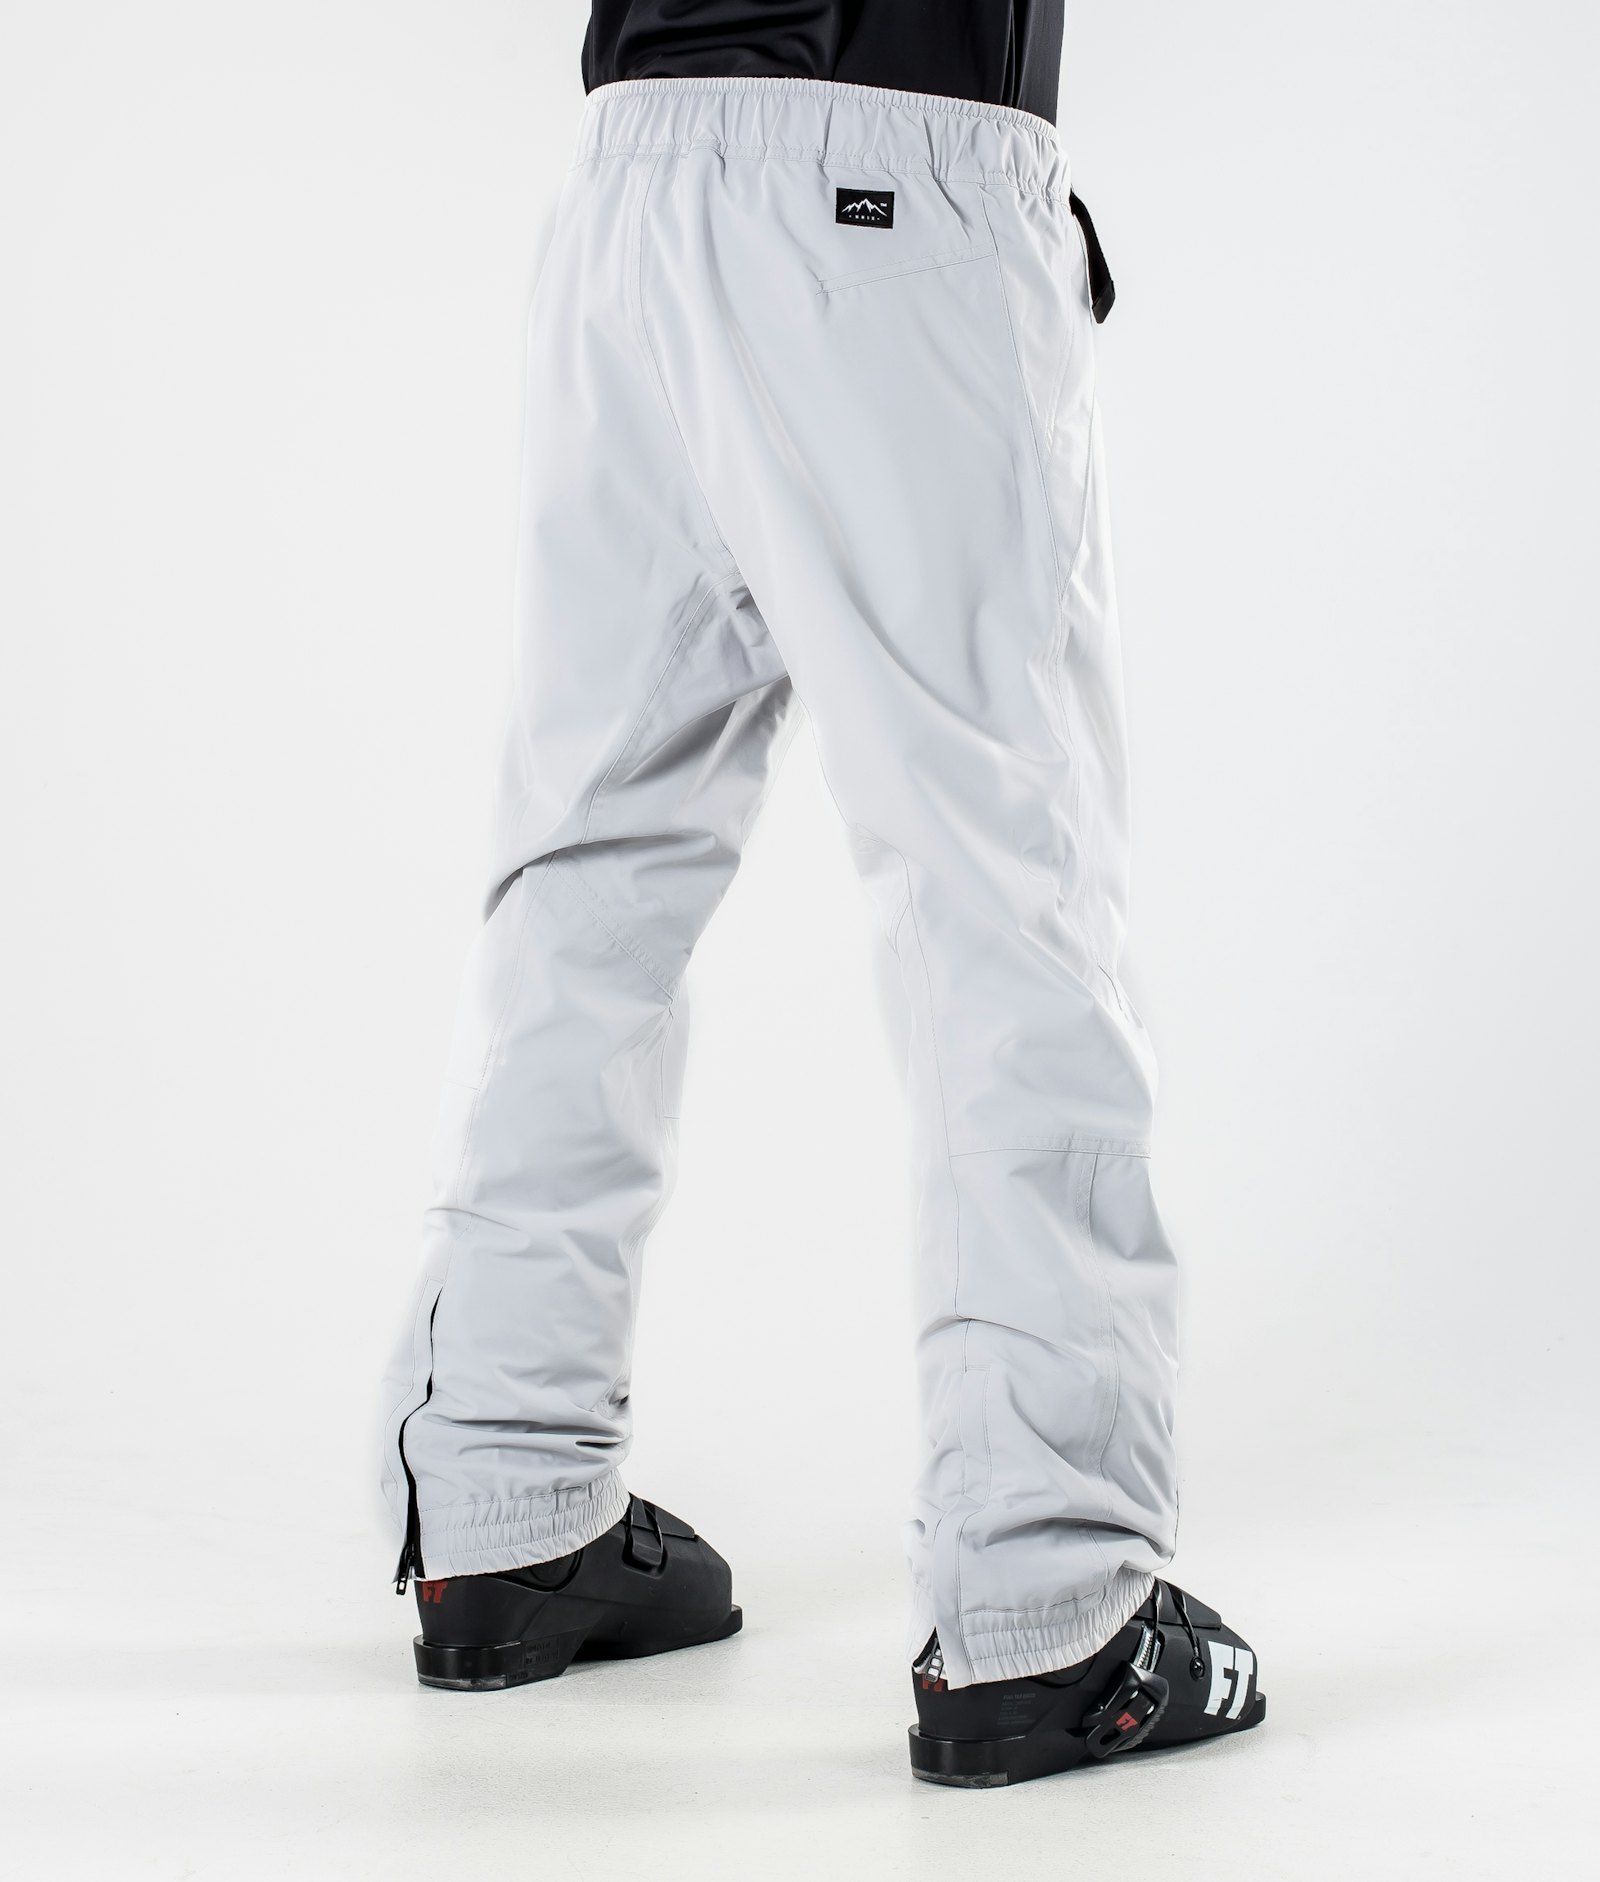 Blizzard 2020 Pantalon de Ski Homme Light Grey